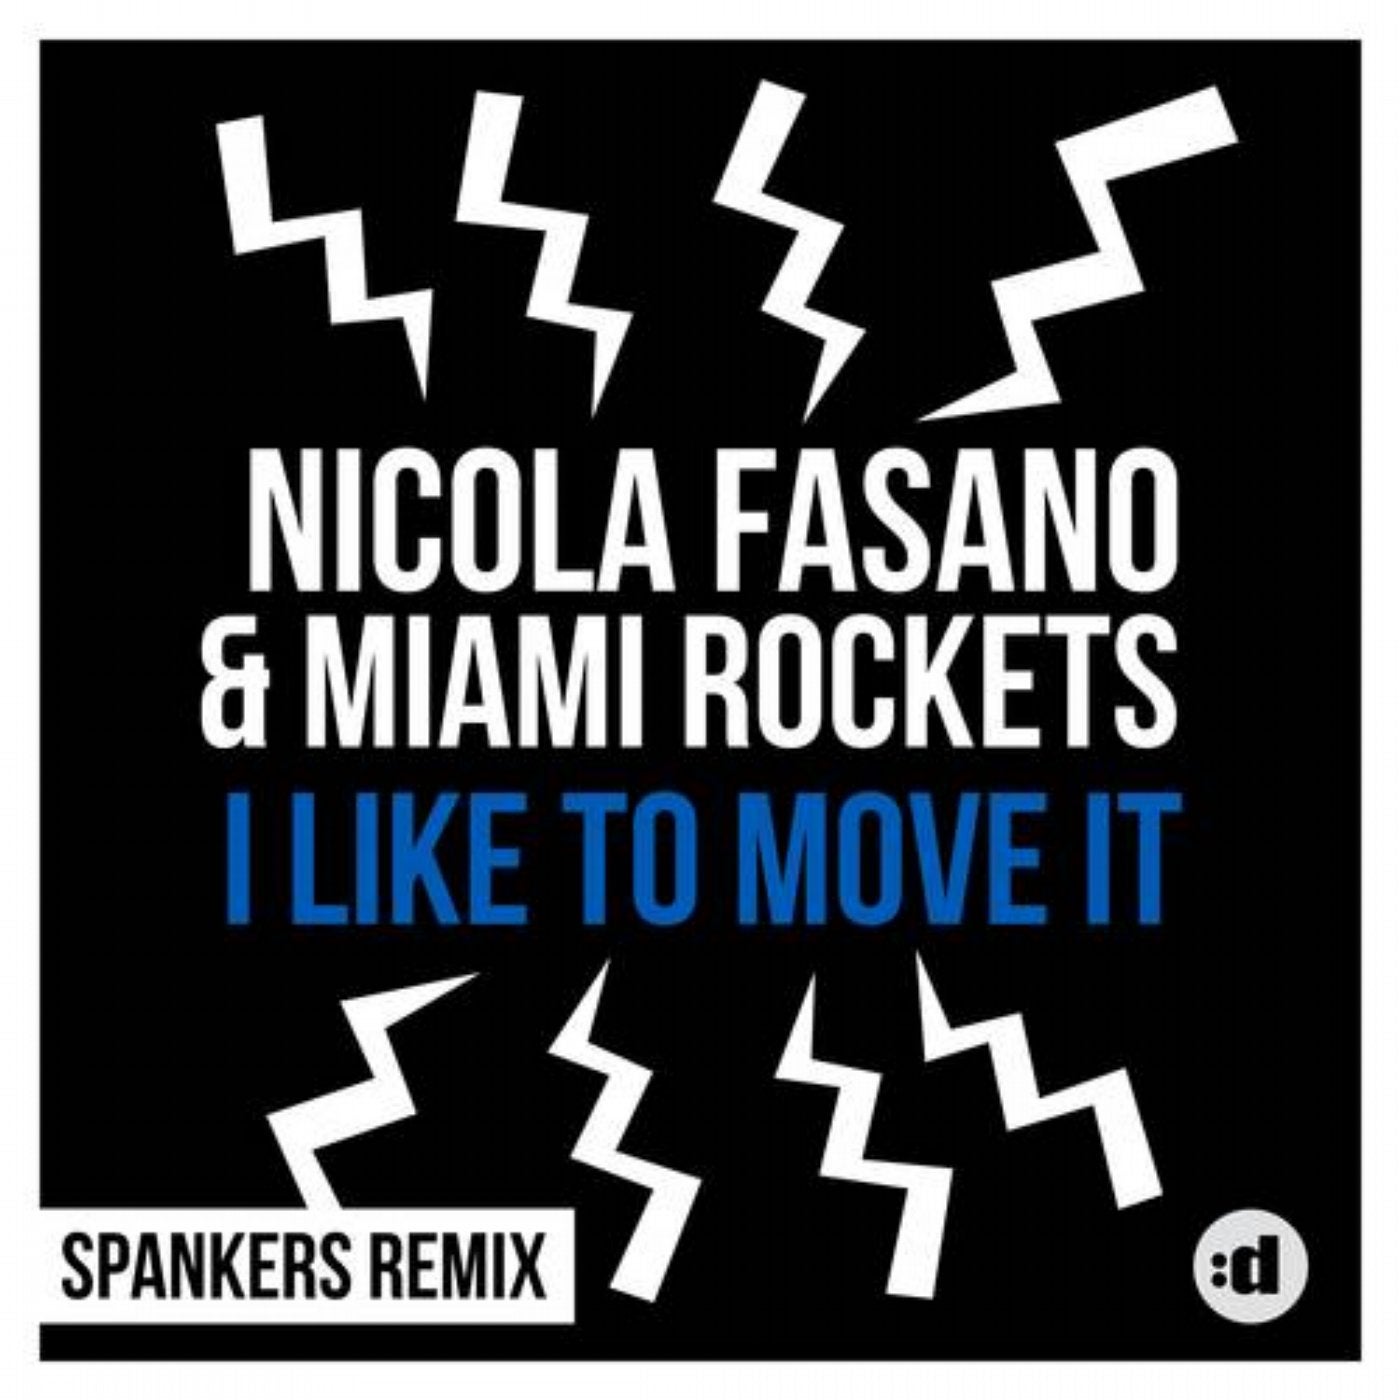 Включи песню move it move it. I like to move it Radio Mix Nicola Fasano, Miami Rockets. I like to move it. Move it микс. Reel 2 real - i like to move it.